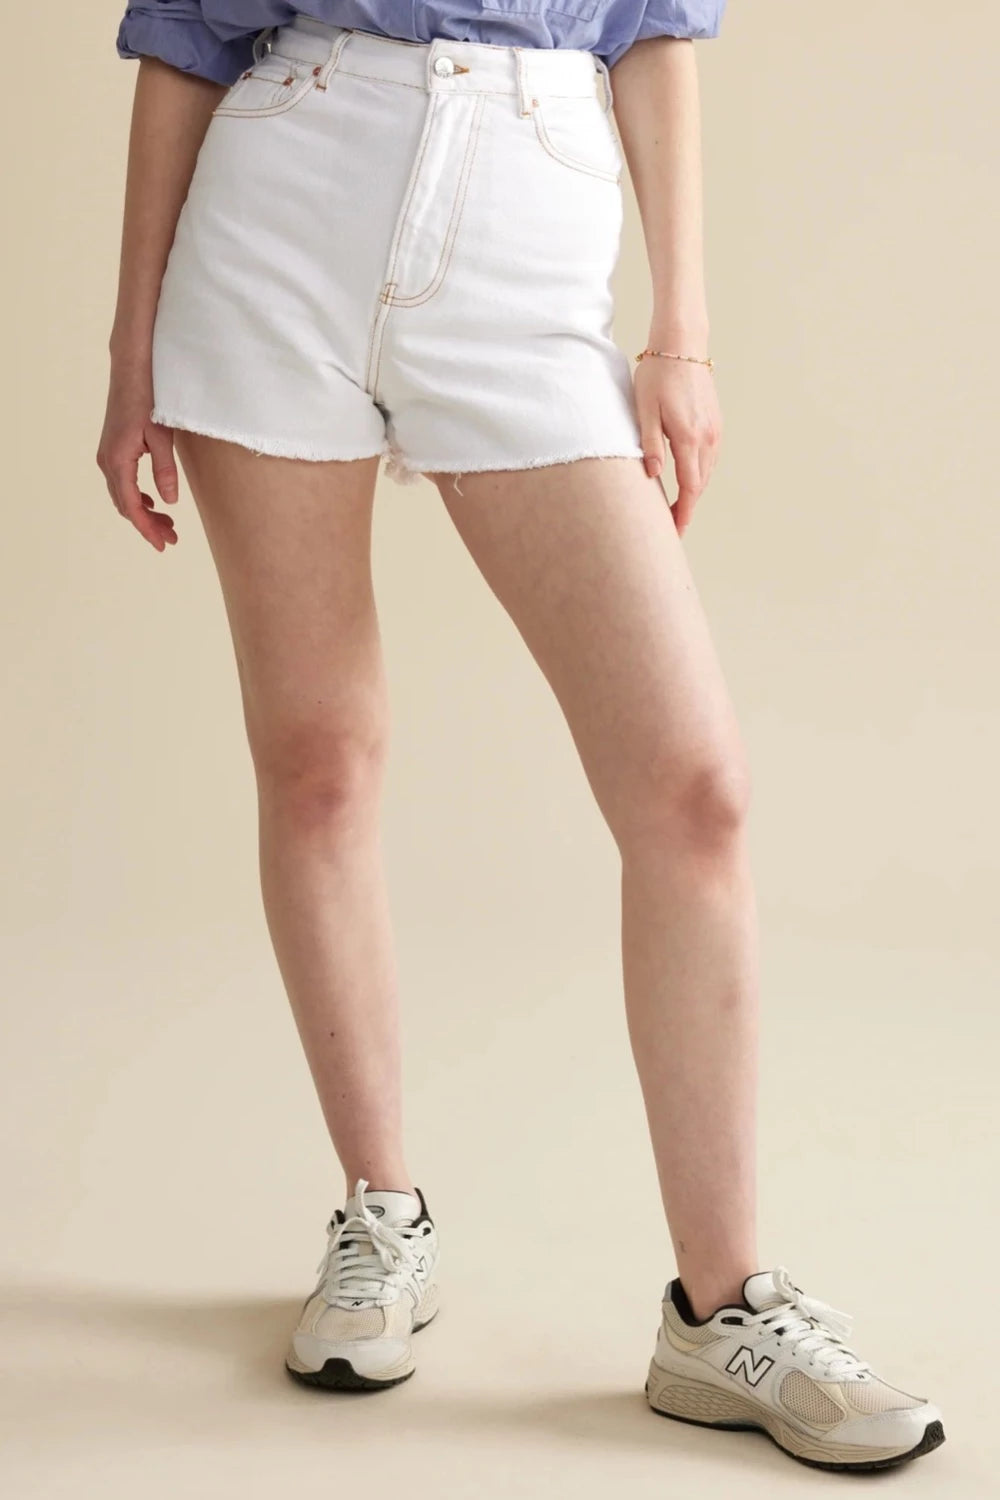 Bellerose - Party Shorts: White